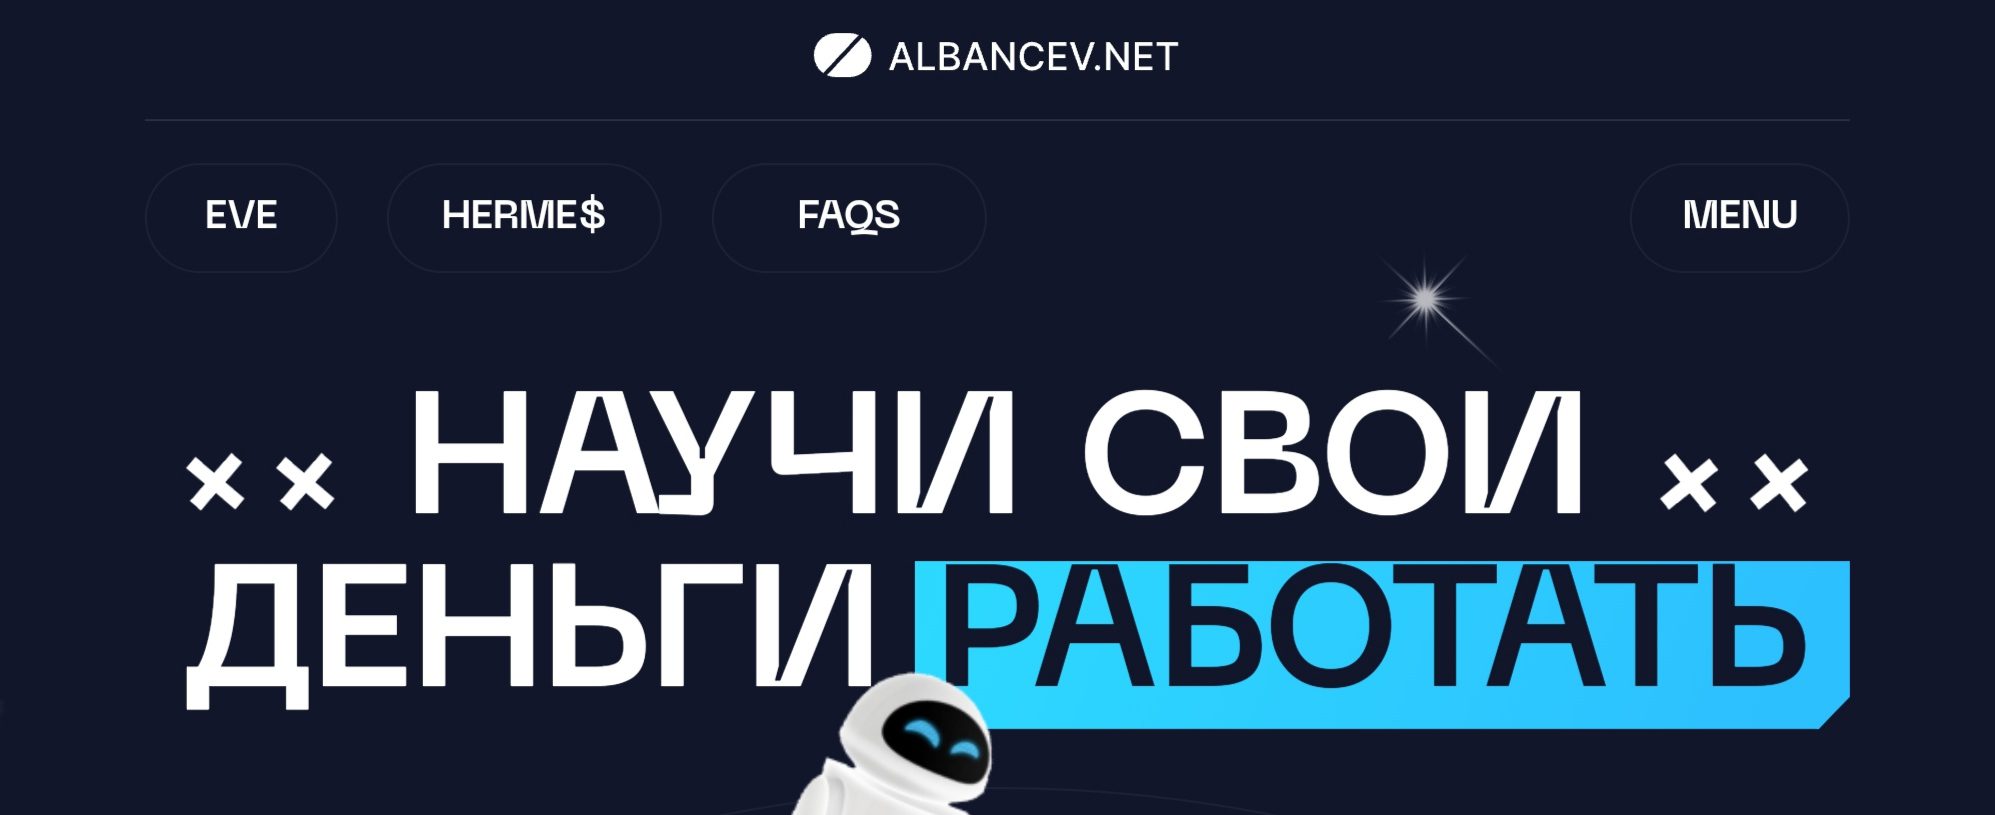 Albancev.net сайт